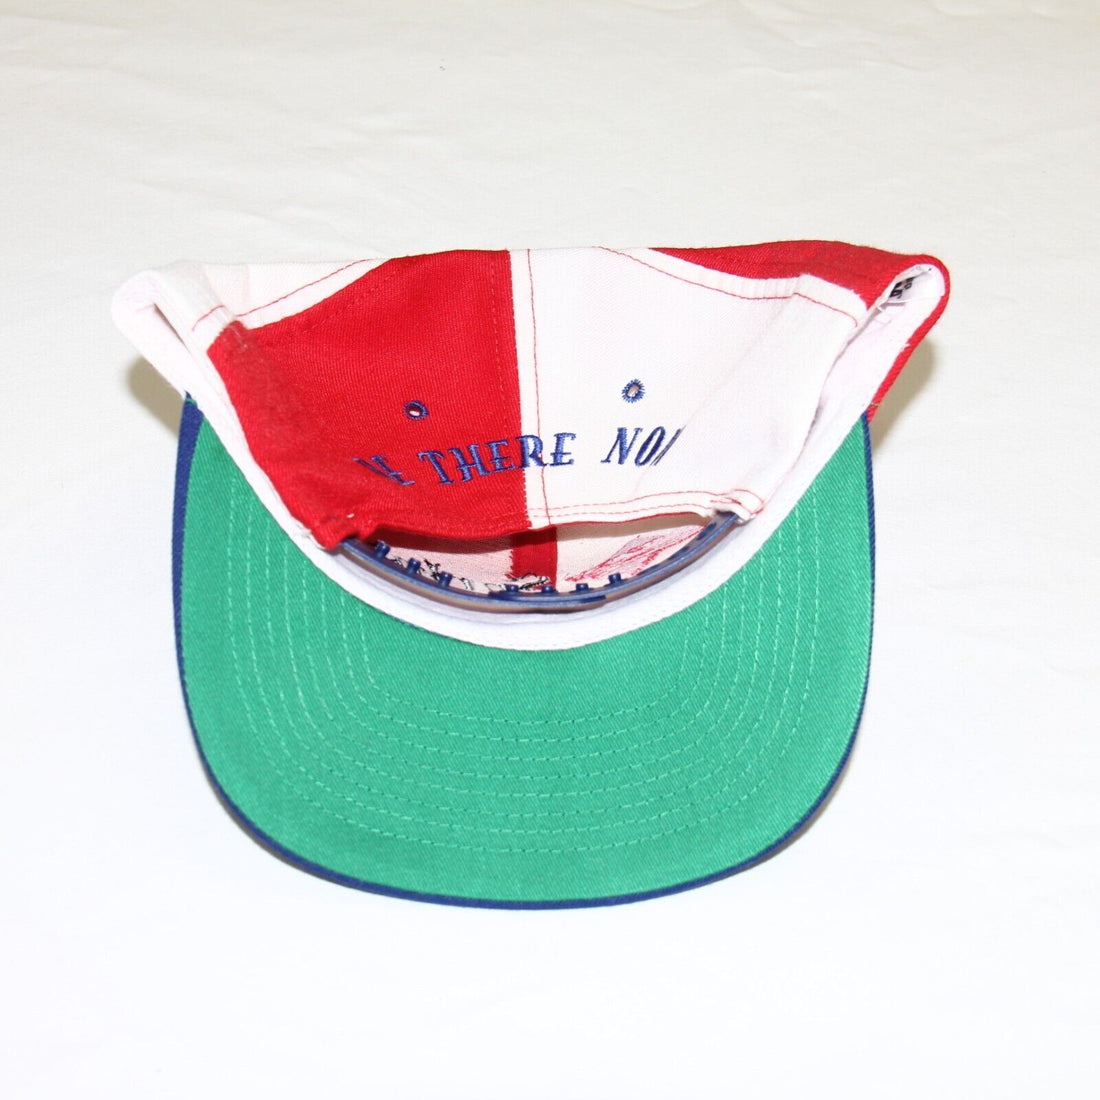 Vintage Sprint World Cup Nutmeg Wool Snapback Hat Cap OSFA 90s FIFA Made USA